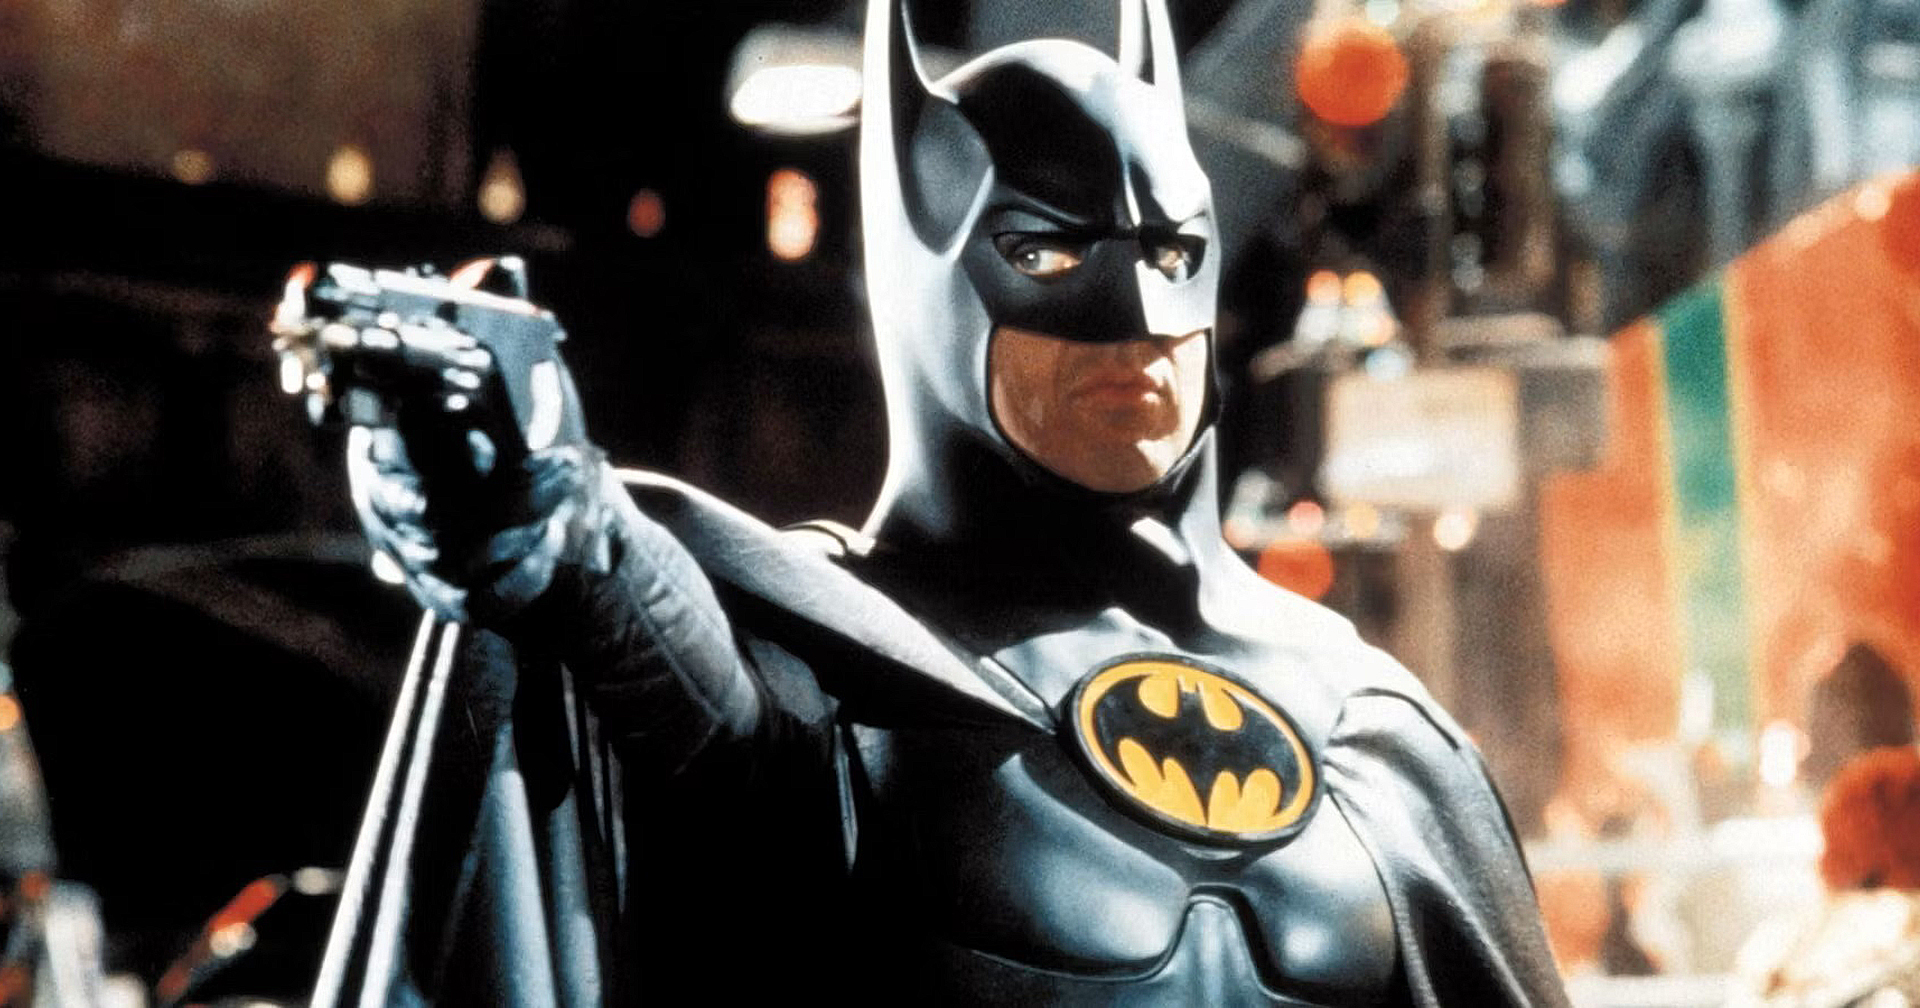 Warner Bros. Discovery เตรียมขายสินทรัพย์เพลงจากหนังในอดีต มูลค่ากว่า 500 ล้านเหรียญ : รวมถึง ‘Batman’ และ ‘Casablanca’ ด้วย